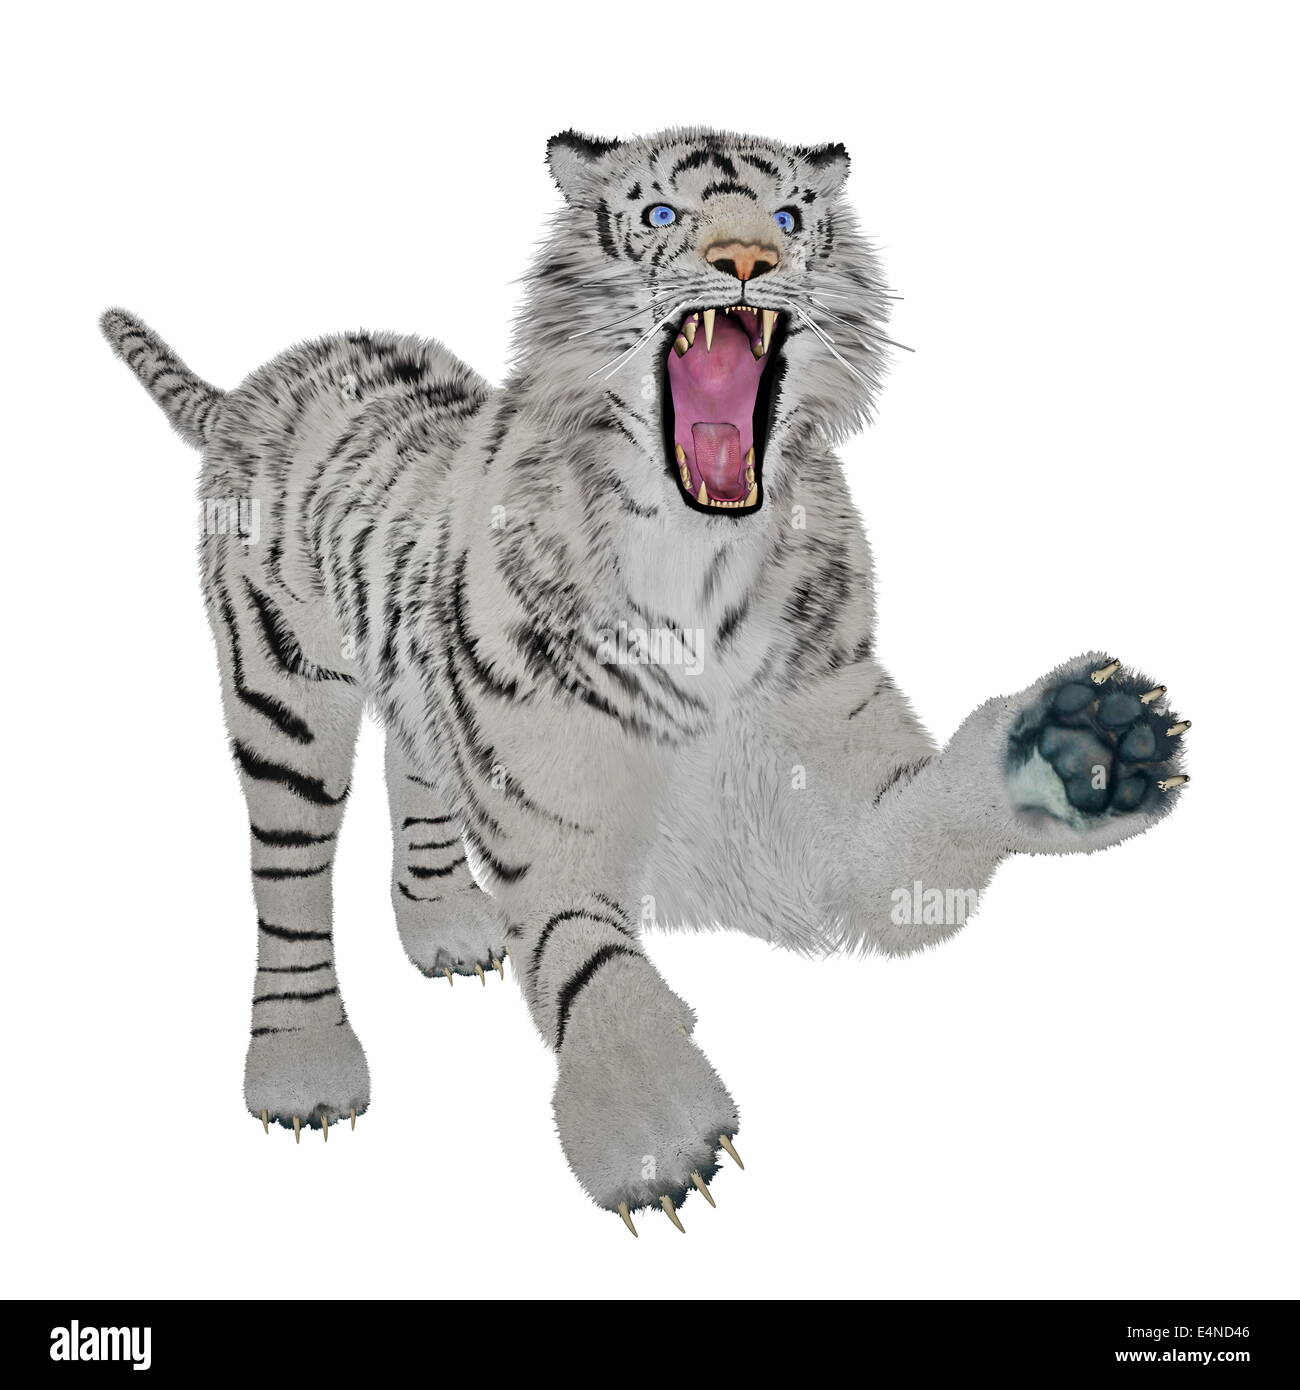 Drawing Bengal Tiger locking or big cat, Stock vector